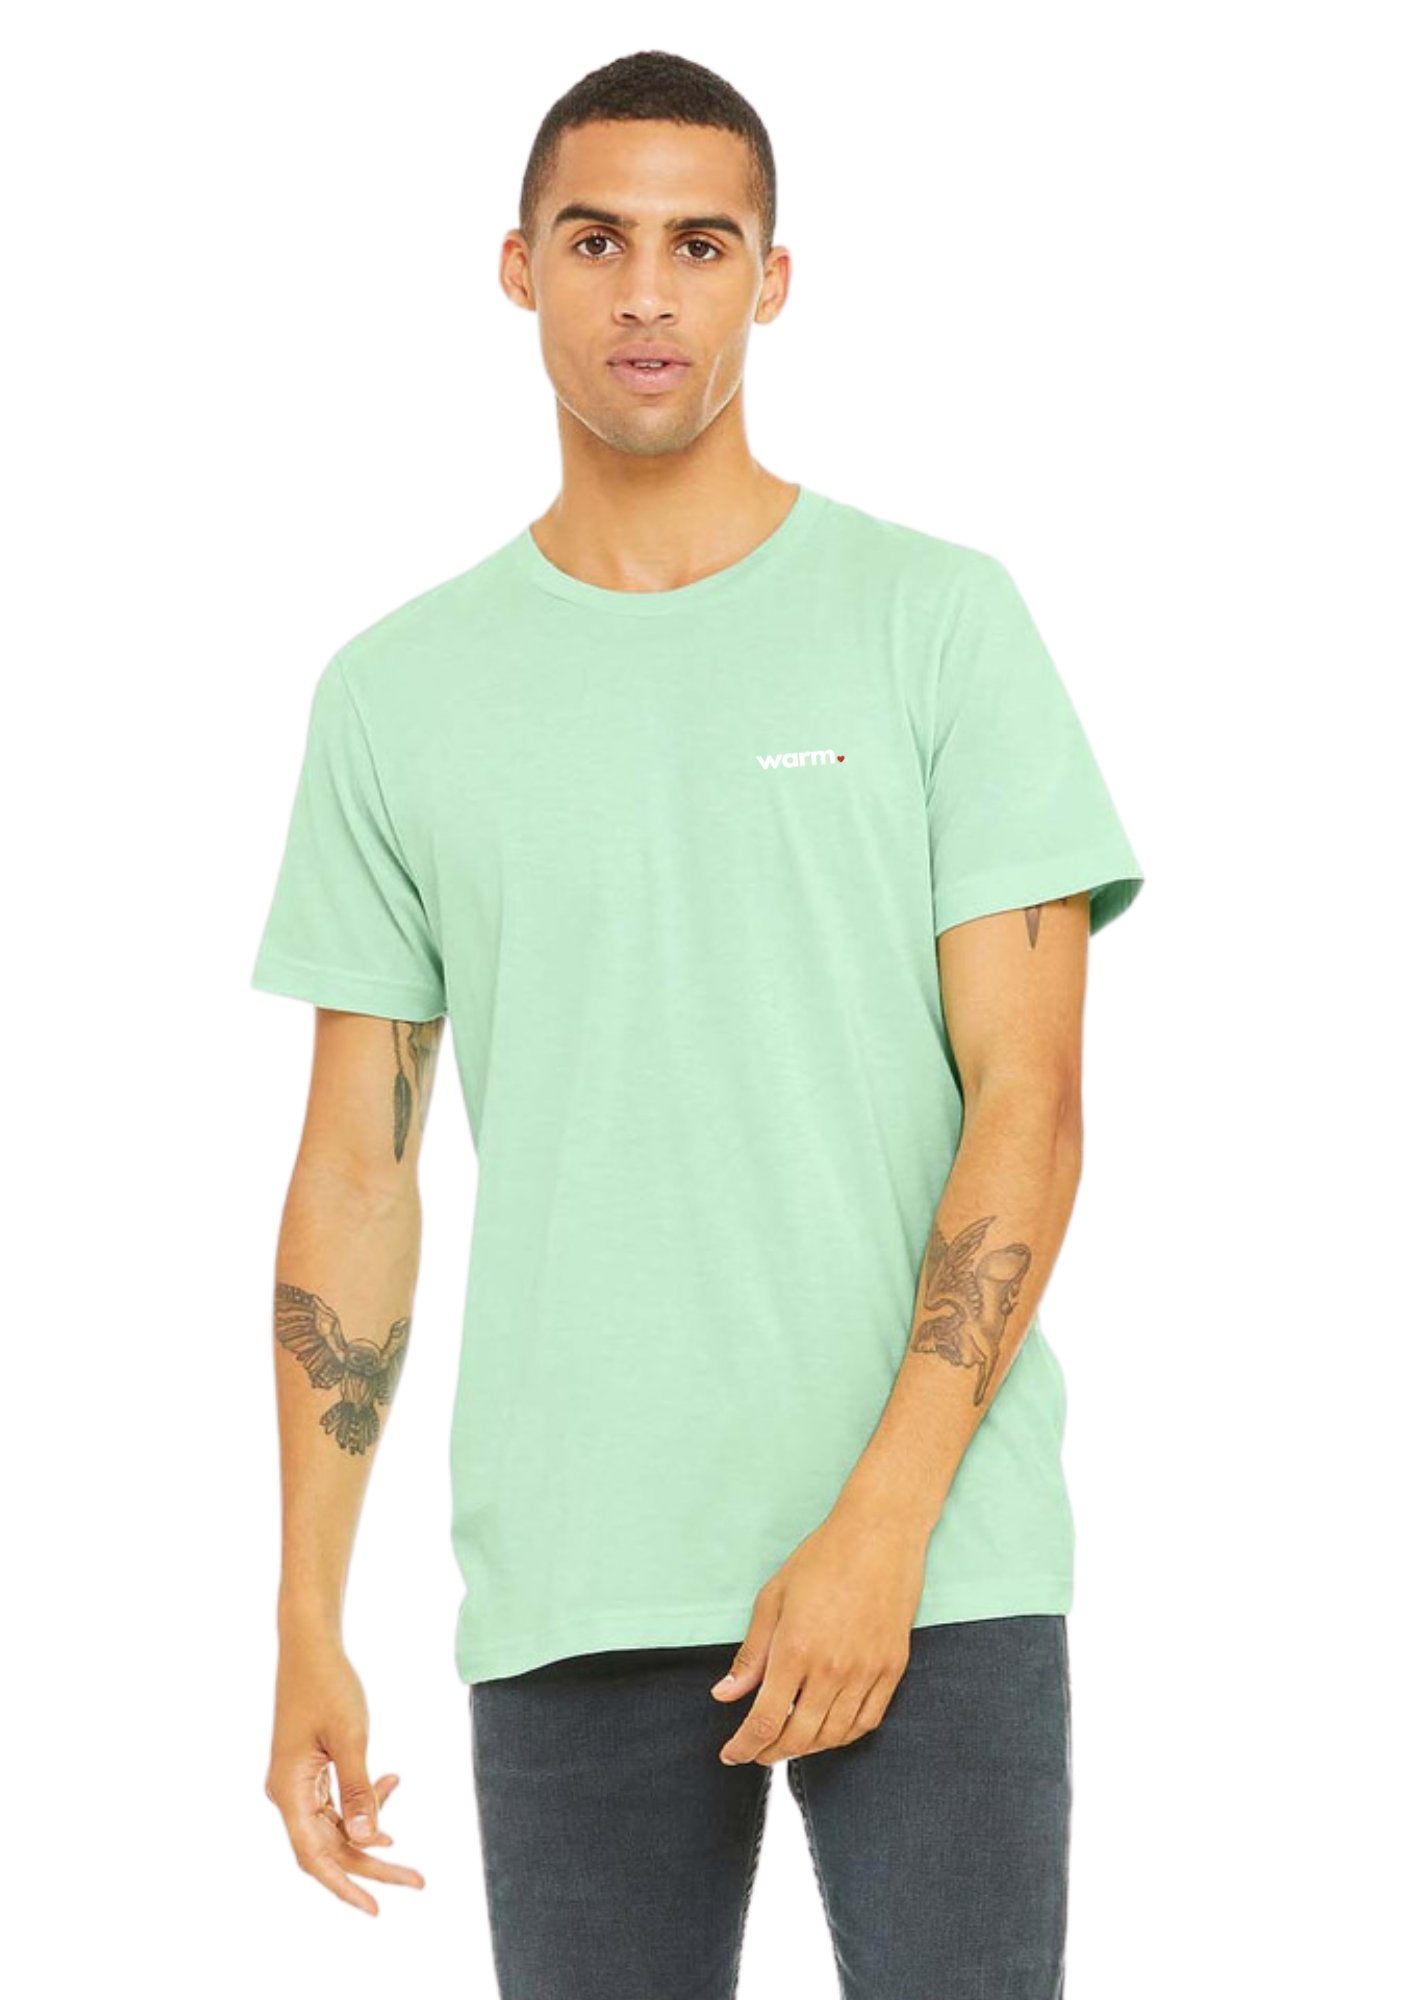 Premium Mint T-Shirt (Men's)